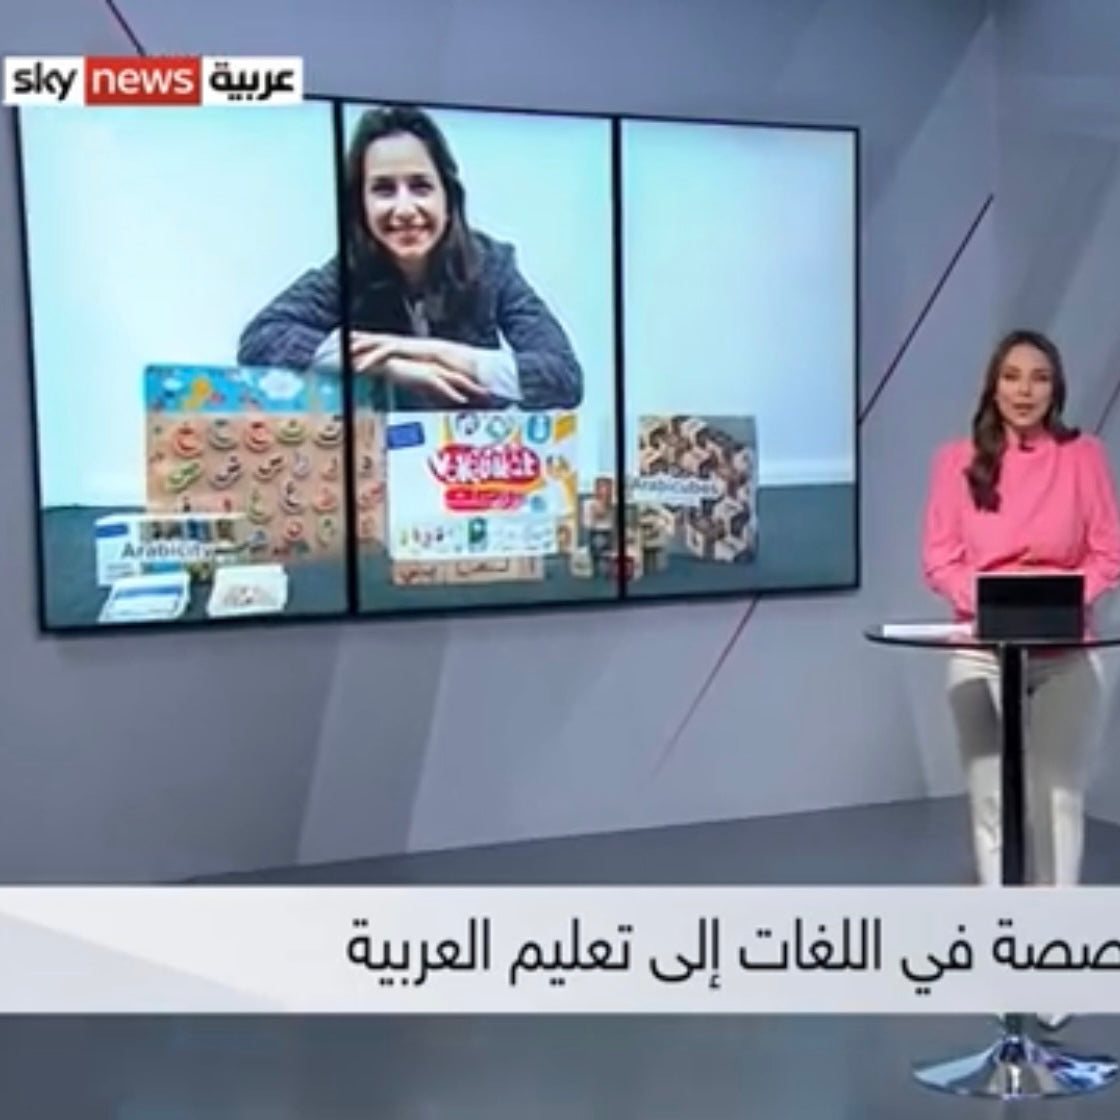 Hala gharib carolina nassar skynews arabia alaabi children